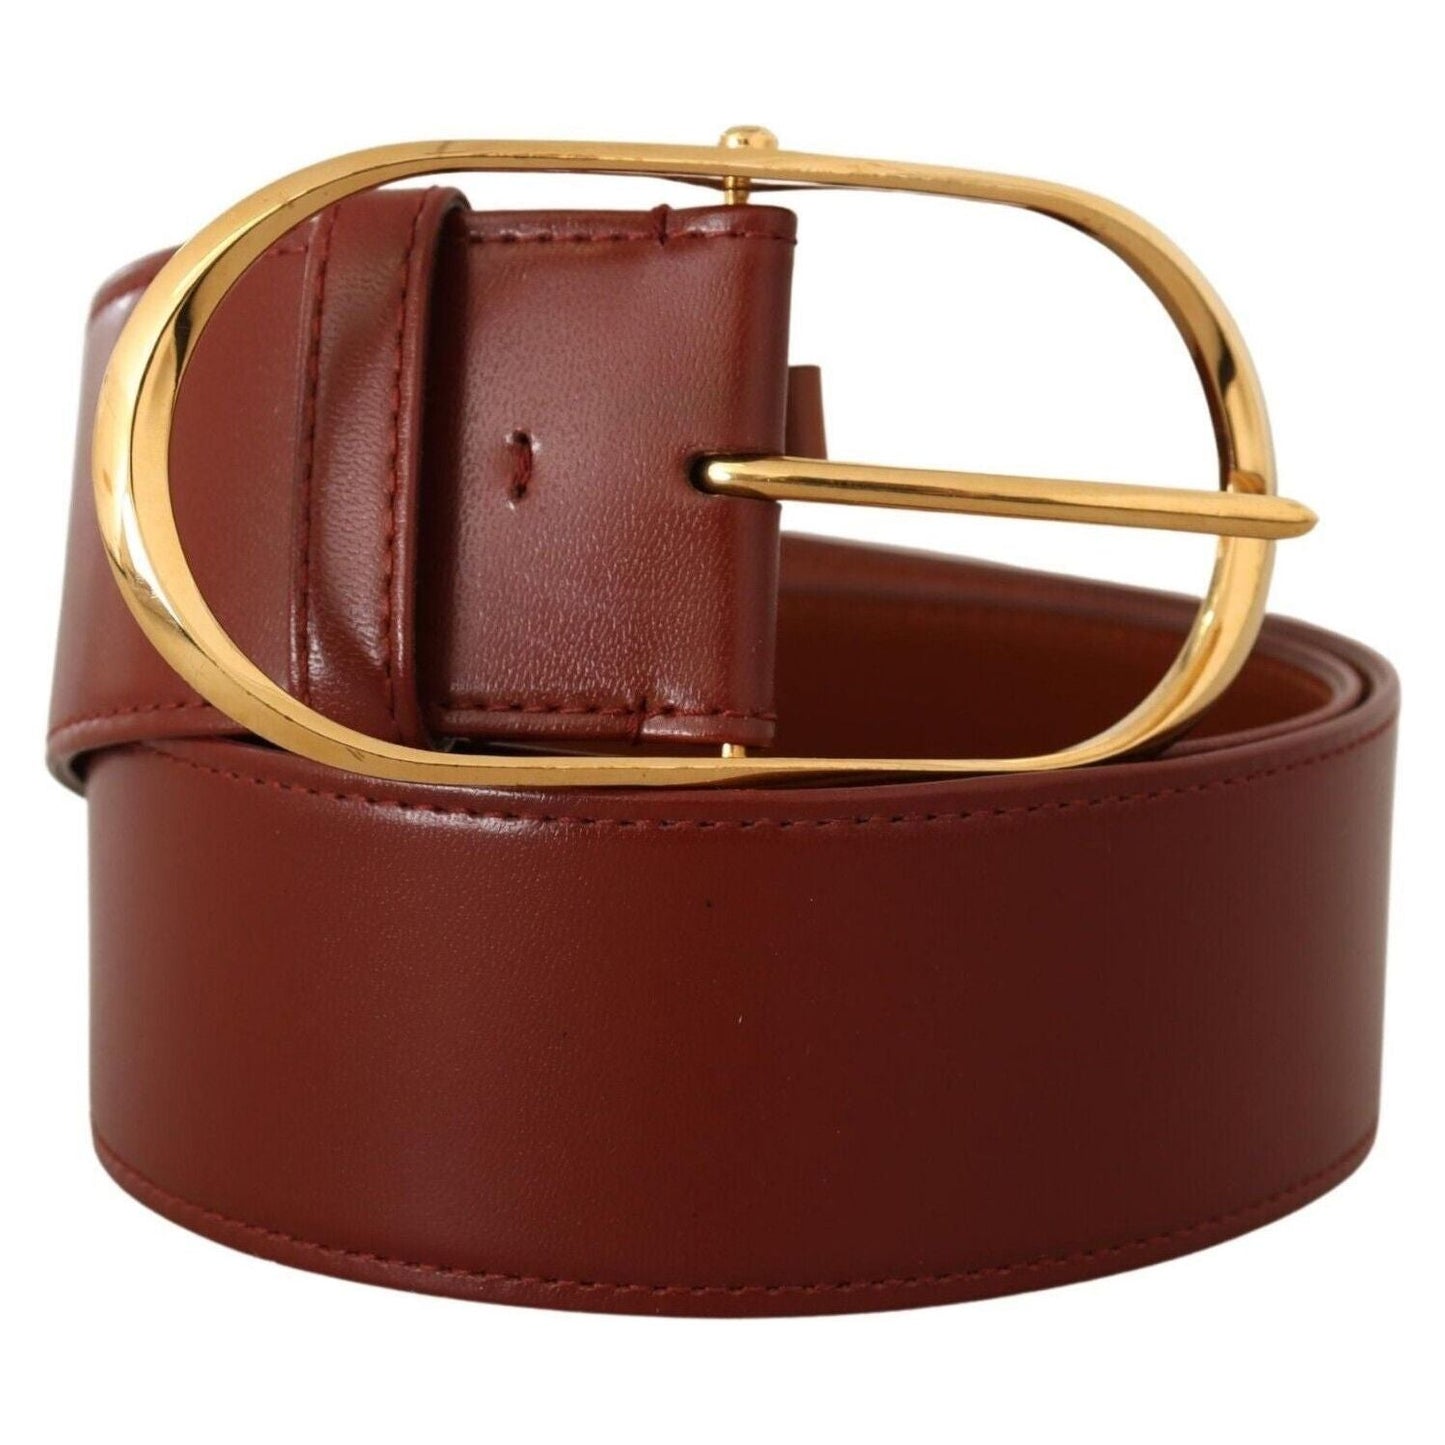 Dolce & Gabbana Elegant Gold Buckle Leather Belt brown-leather-gold-metal-oval-buckle-belt-8 s-l1600-2-291-964c8e74-b69.jpg